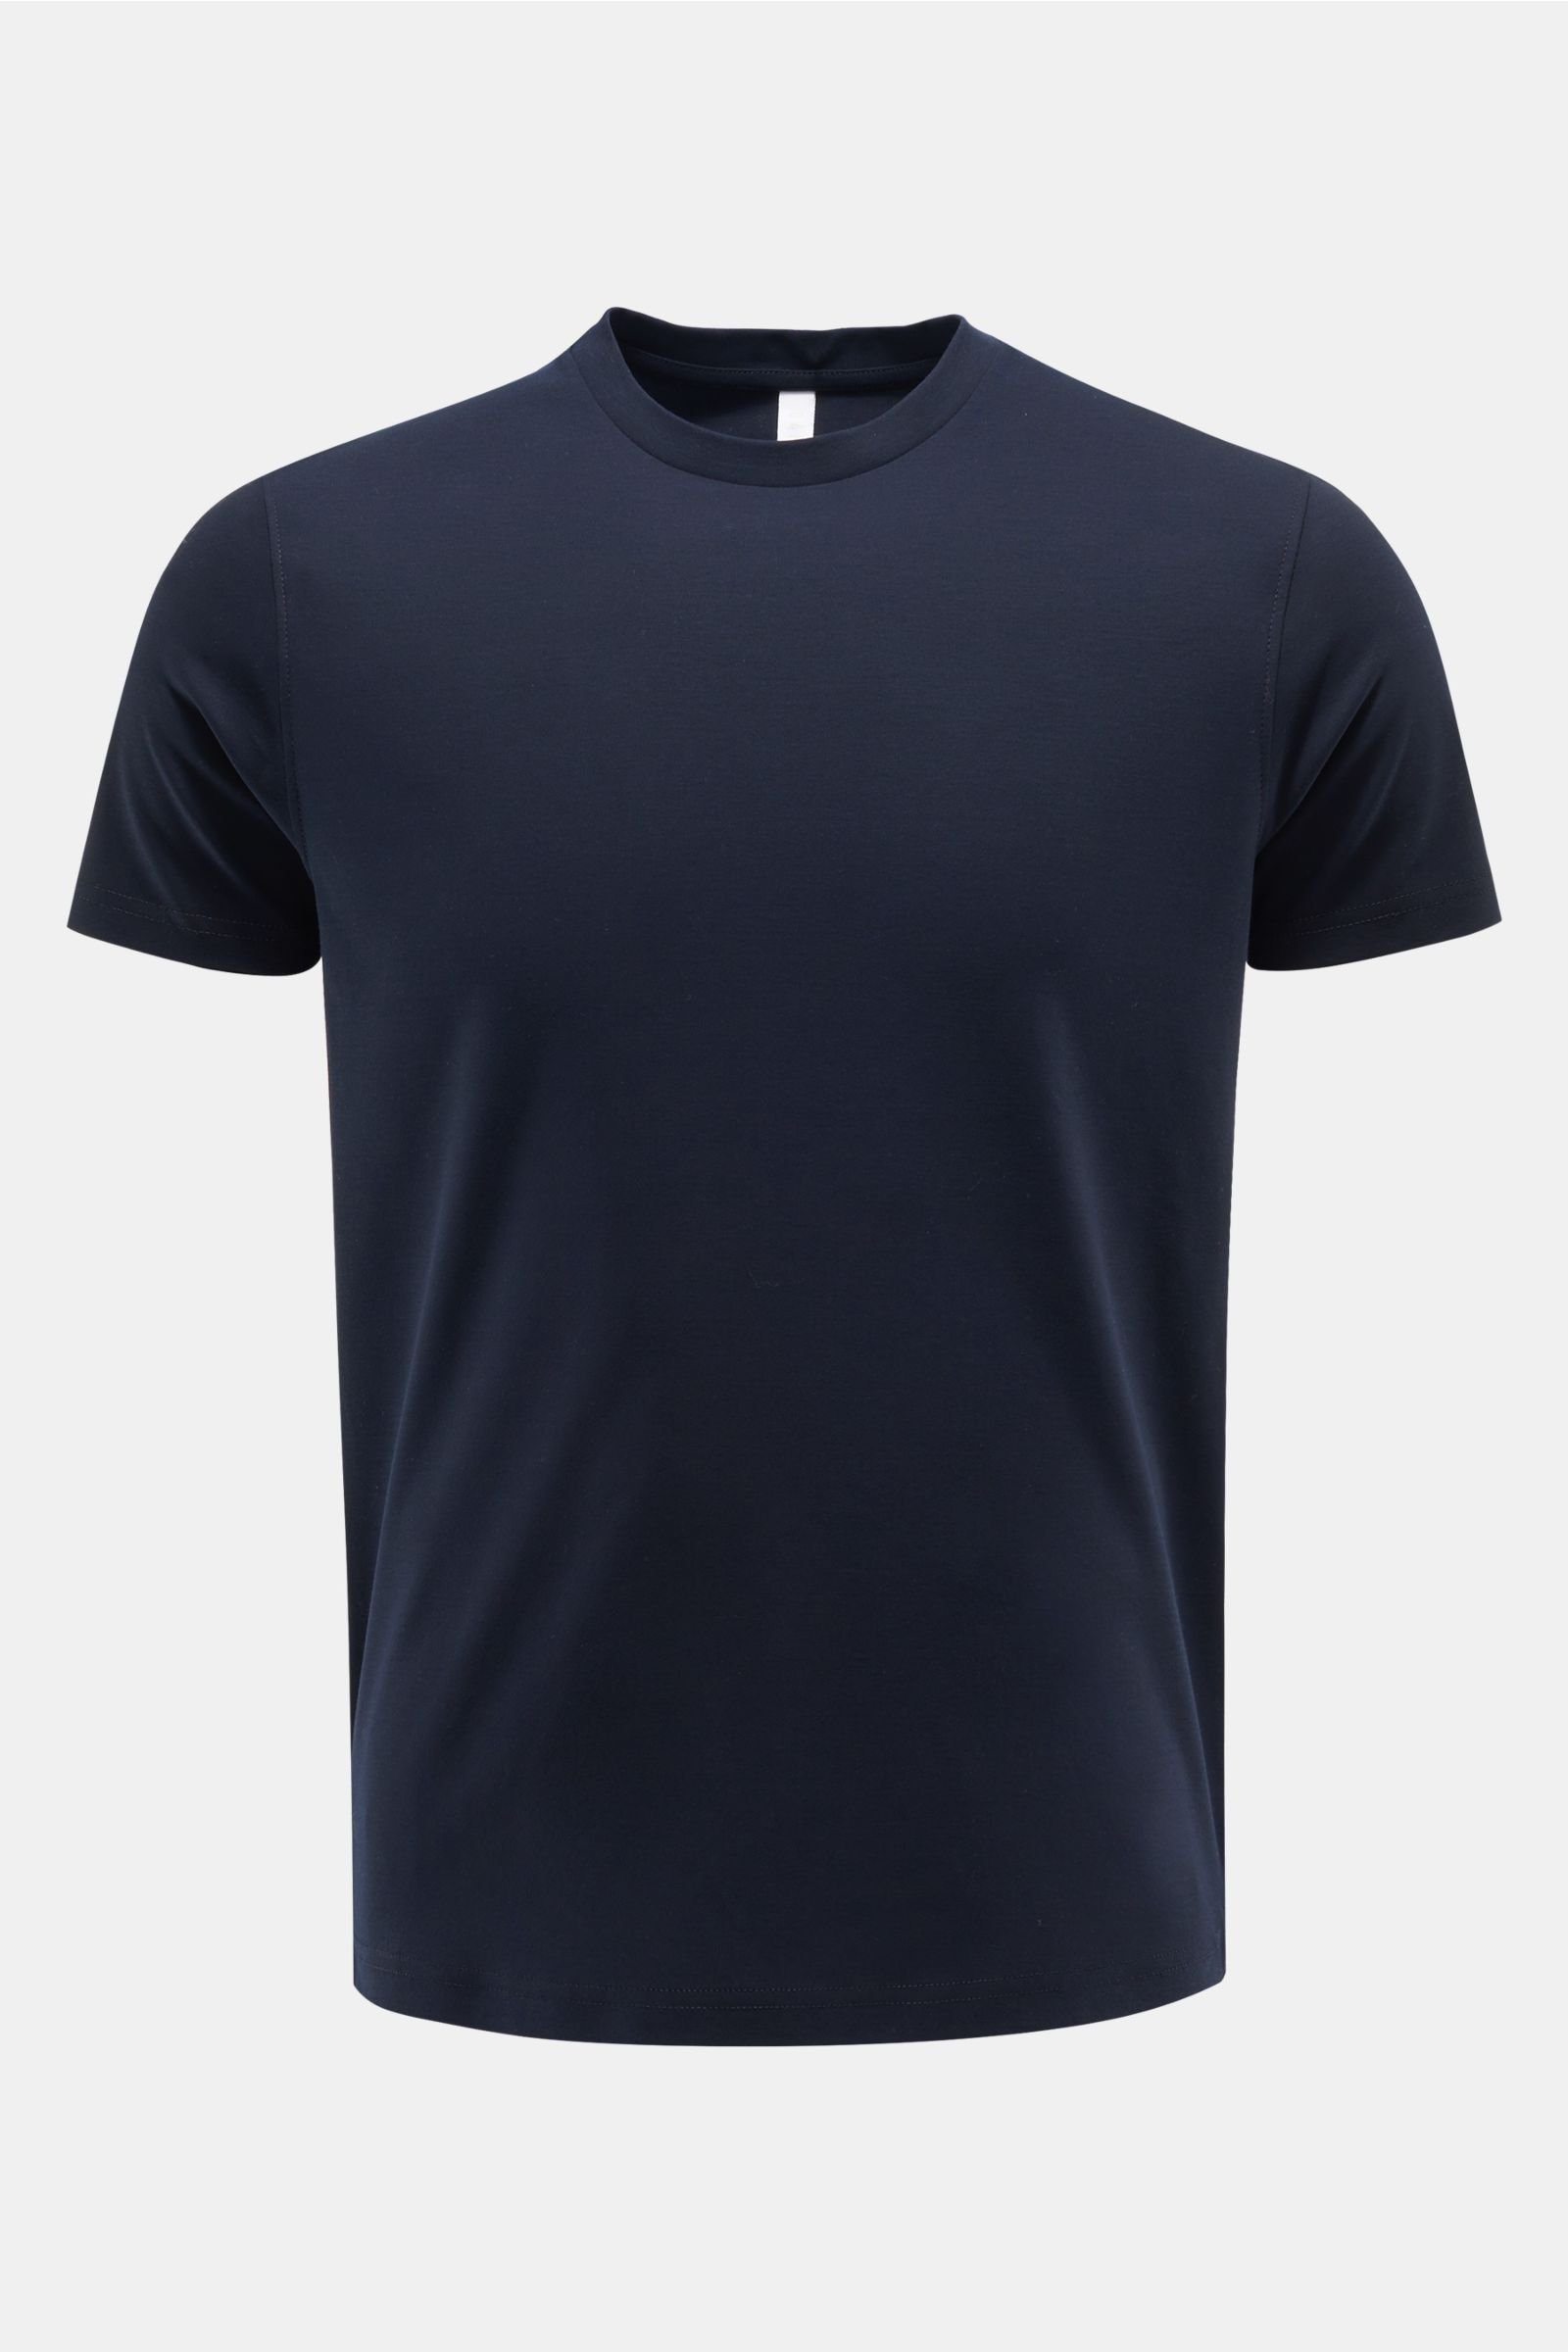 R-Neck T-Shirt navy